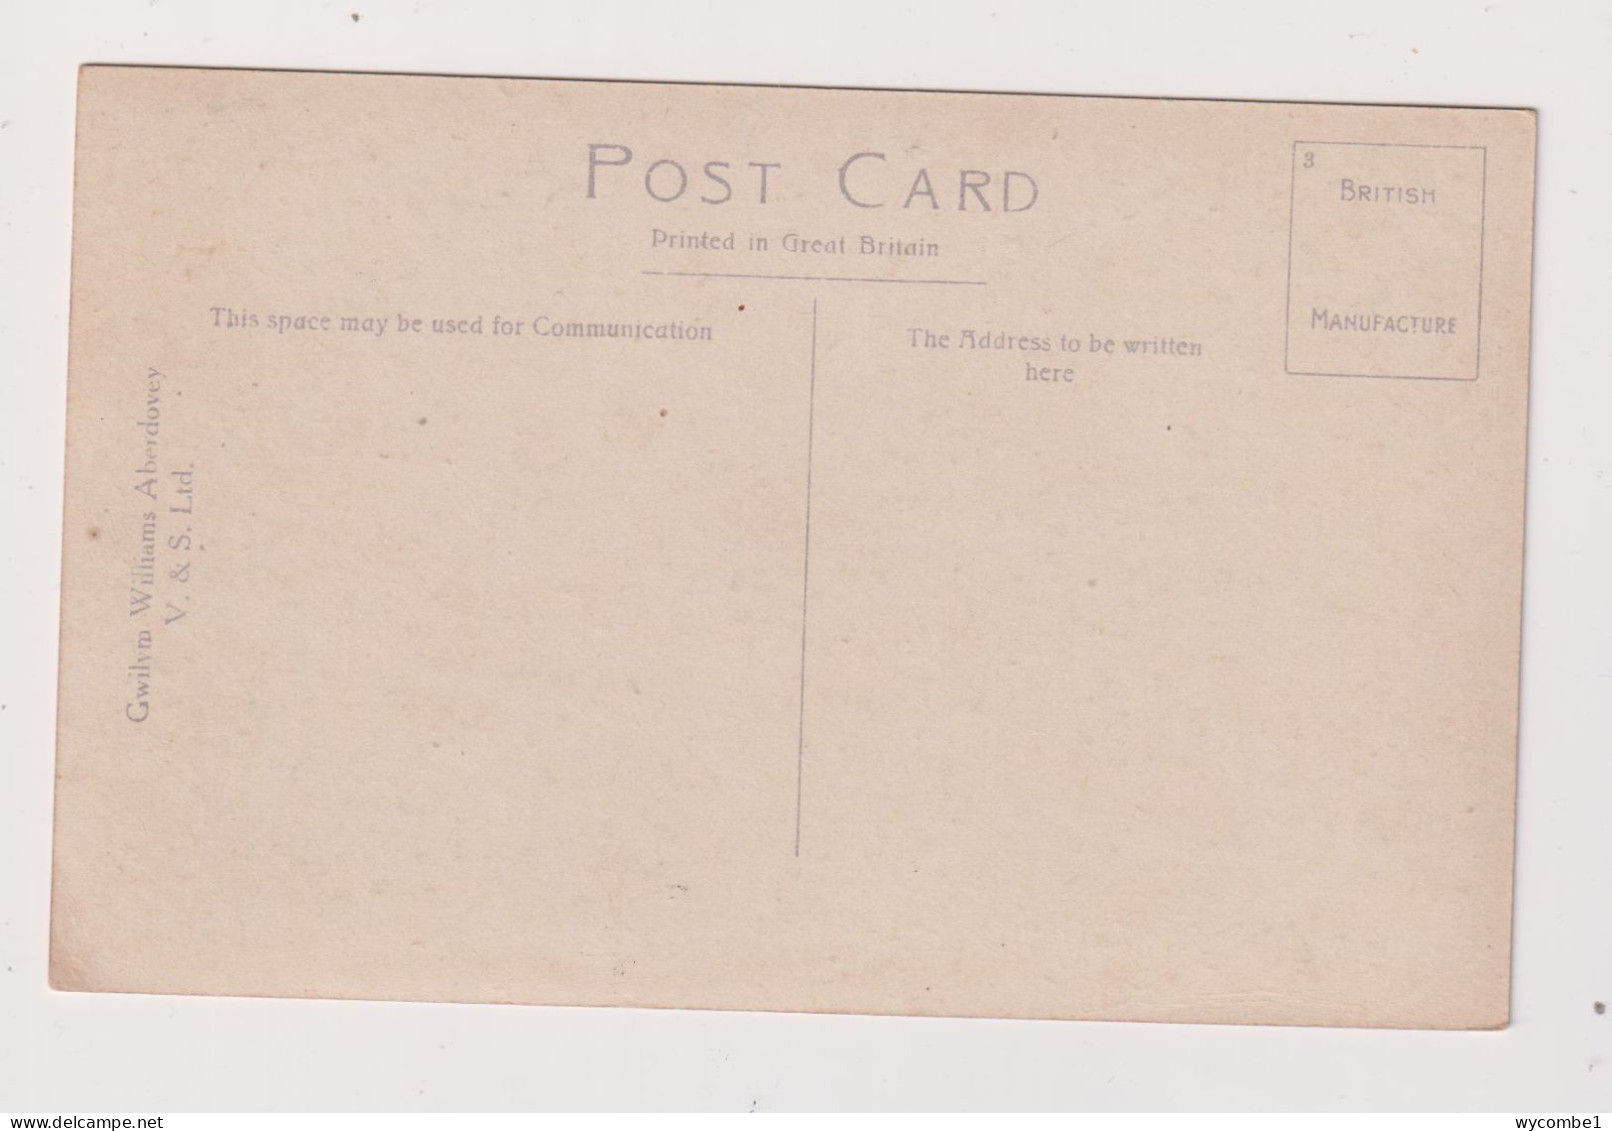 WALES - Llyfnant Vaslley Unused Vintage Postcard - Cardiganshire